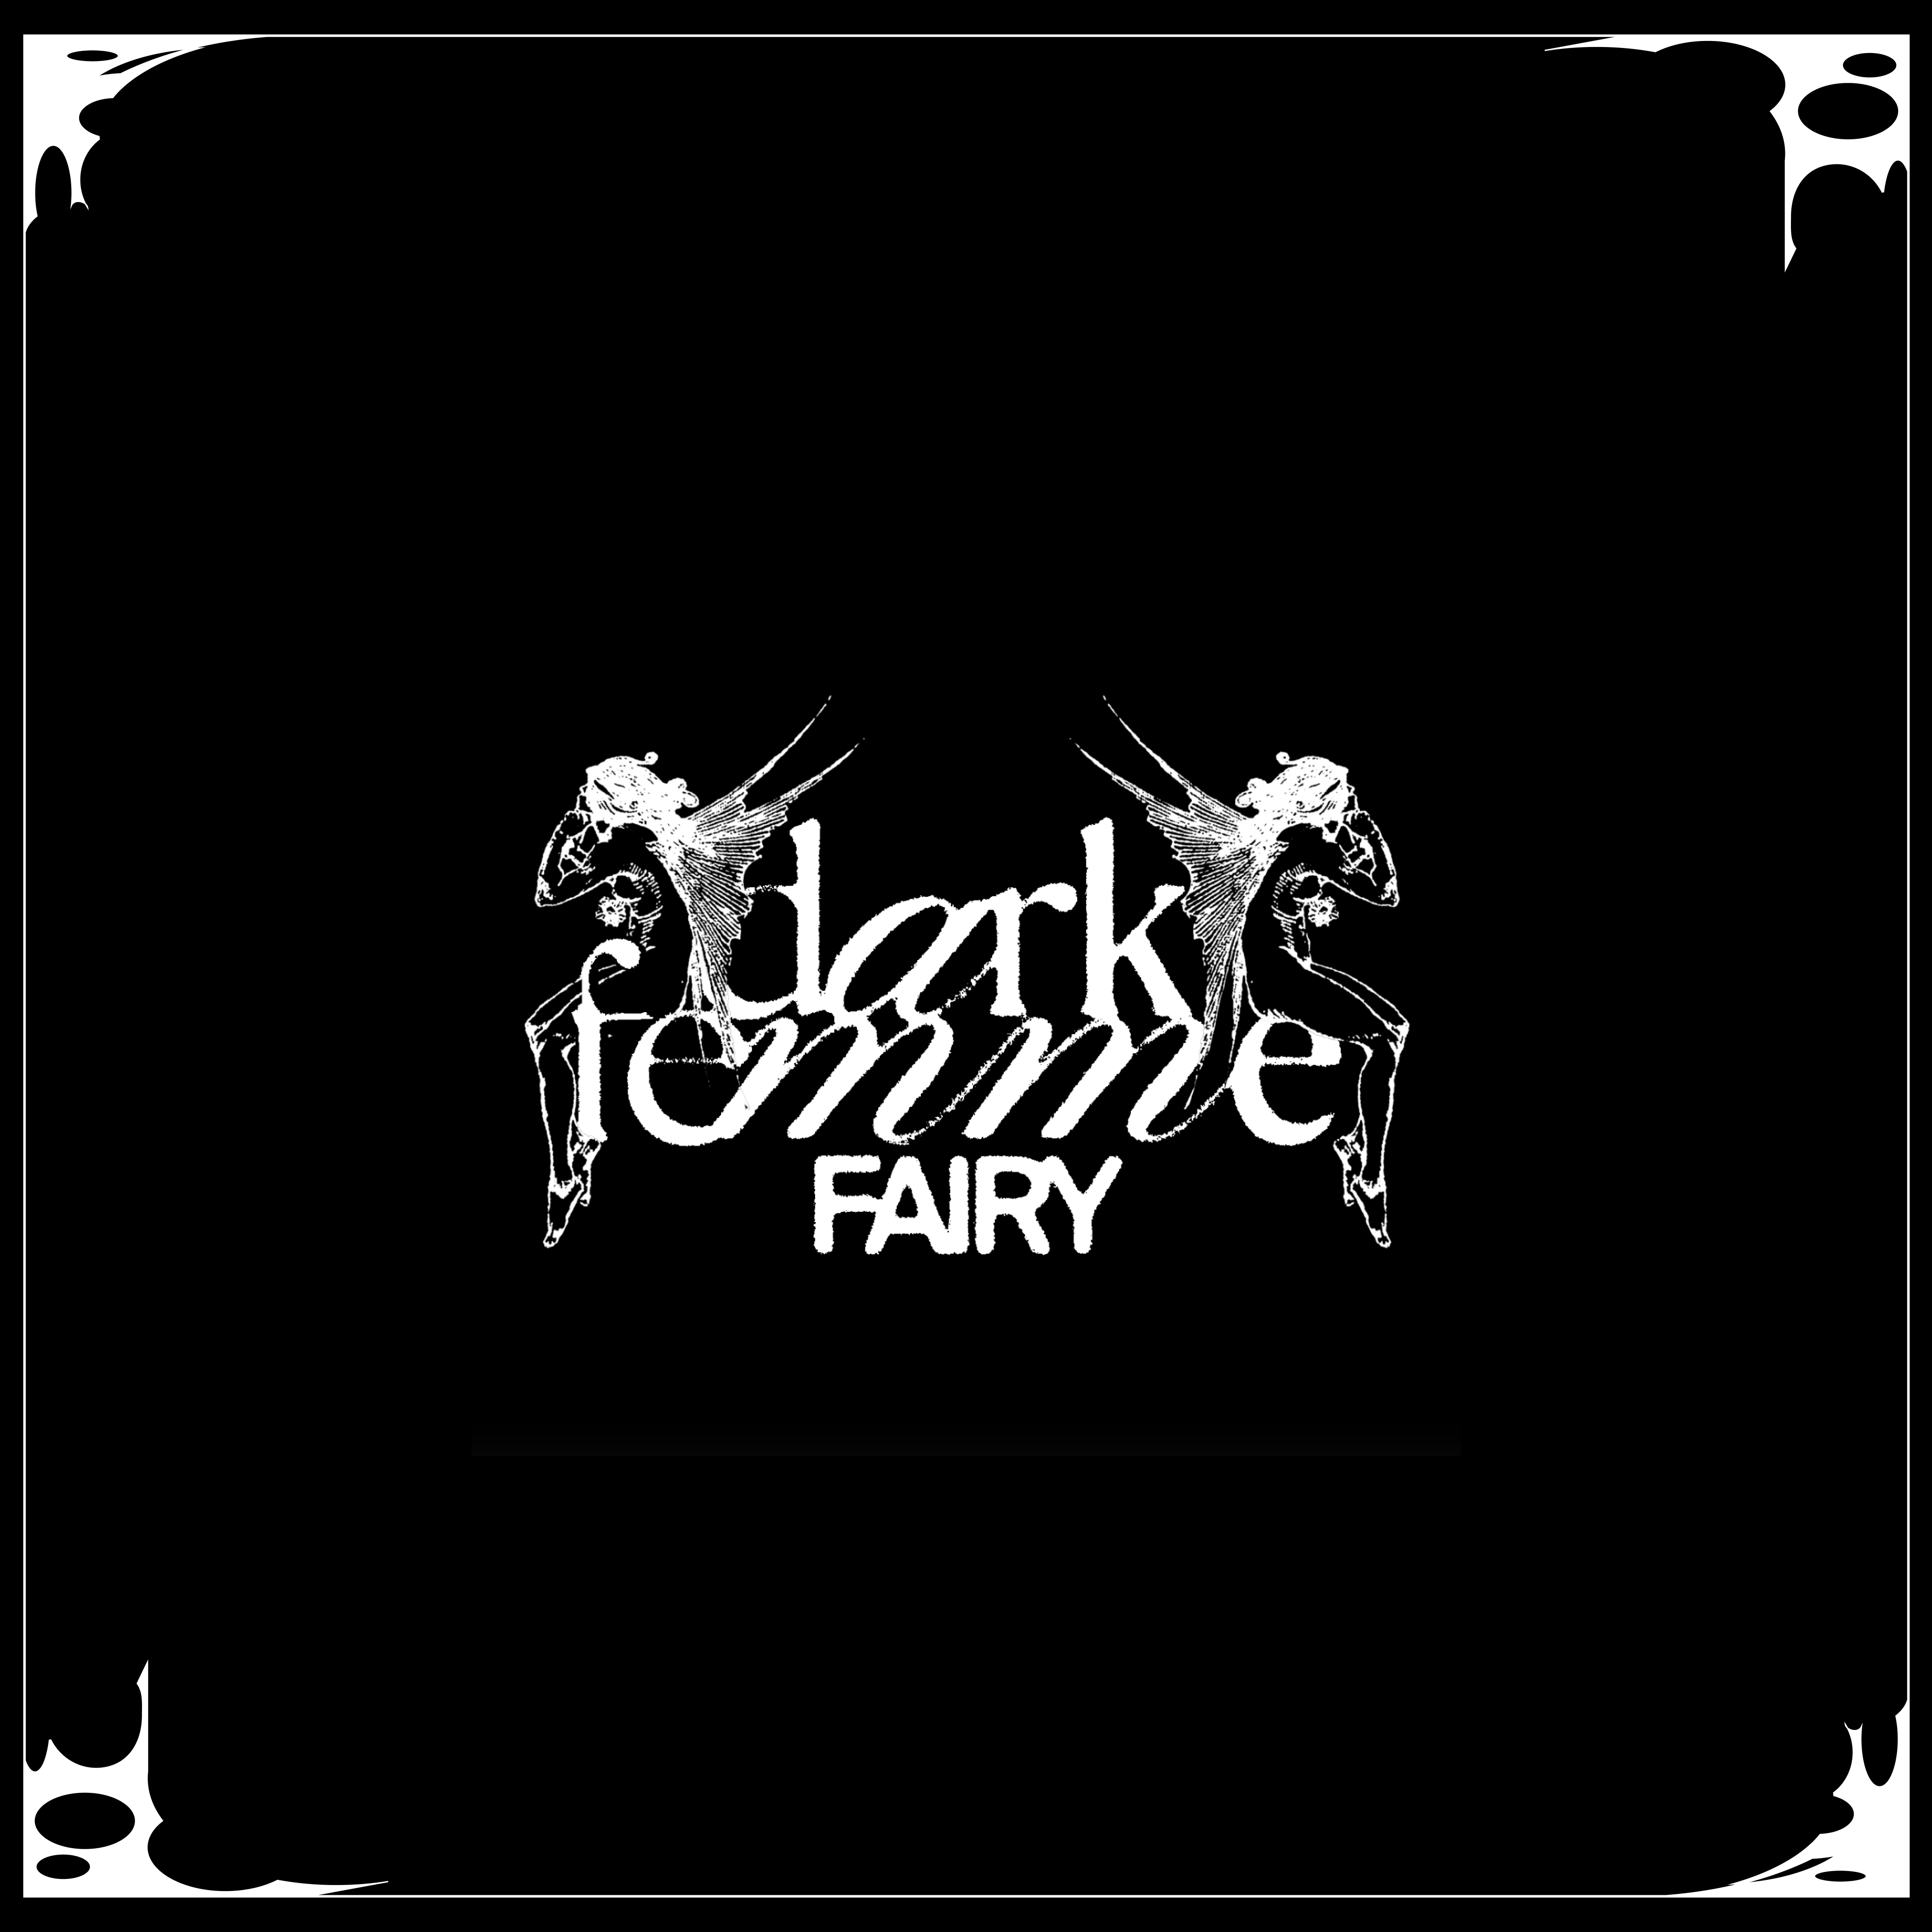 appledoll dark femme fairy logo